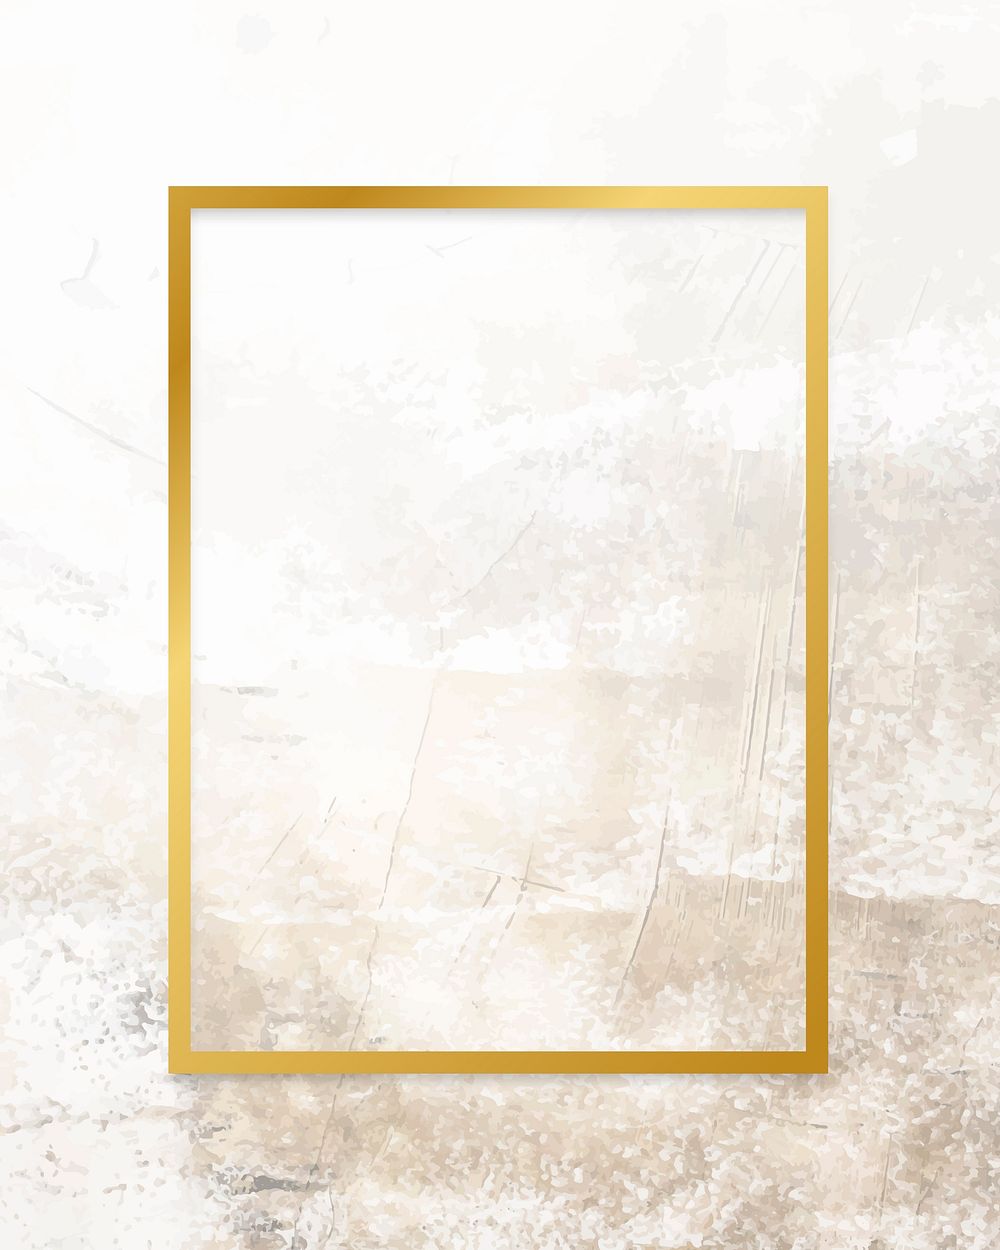 Golden framed rectangle on a grunge textured vector